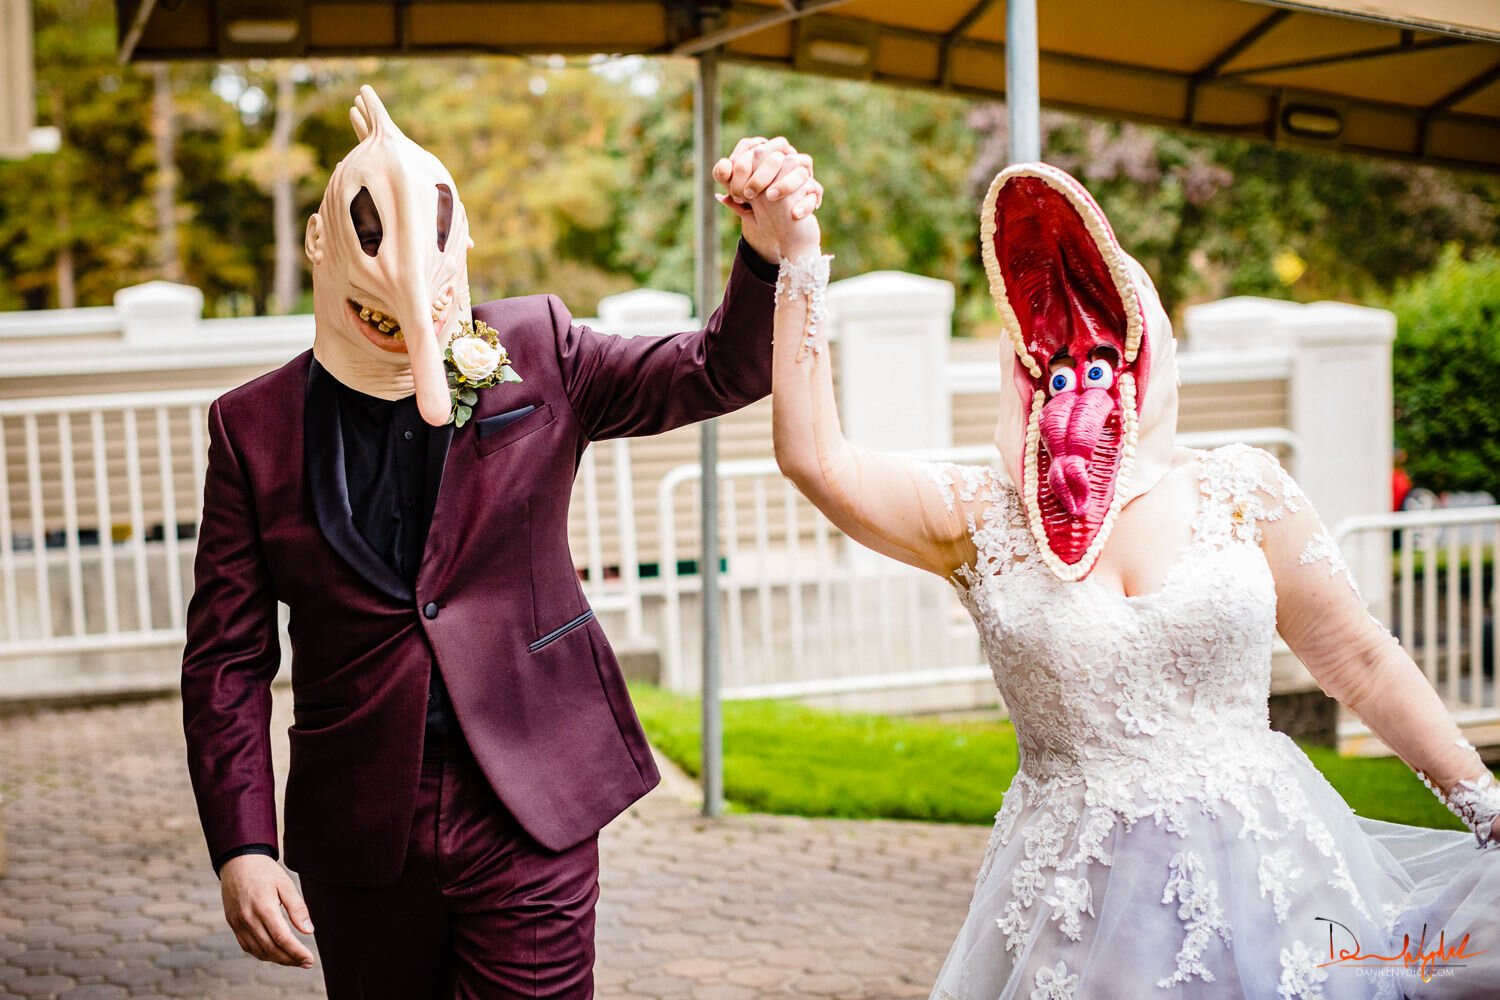 beetlejuice masks at nj halloween wedding